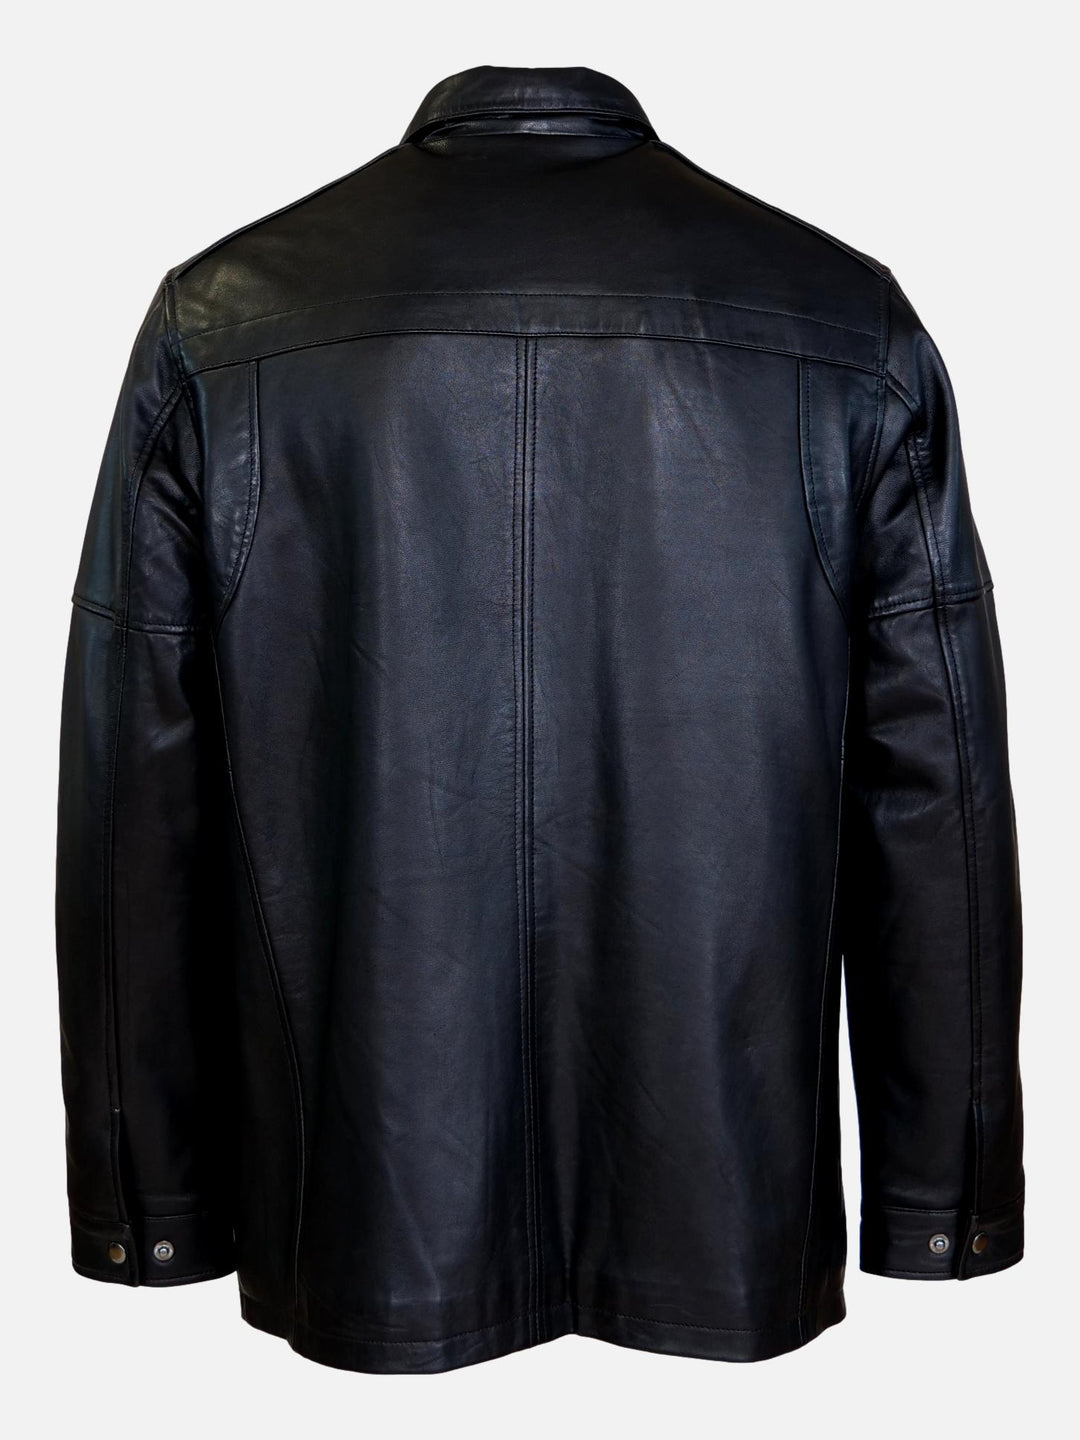 564 - Lamb New Zeeland Leather - Man - Black